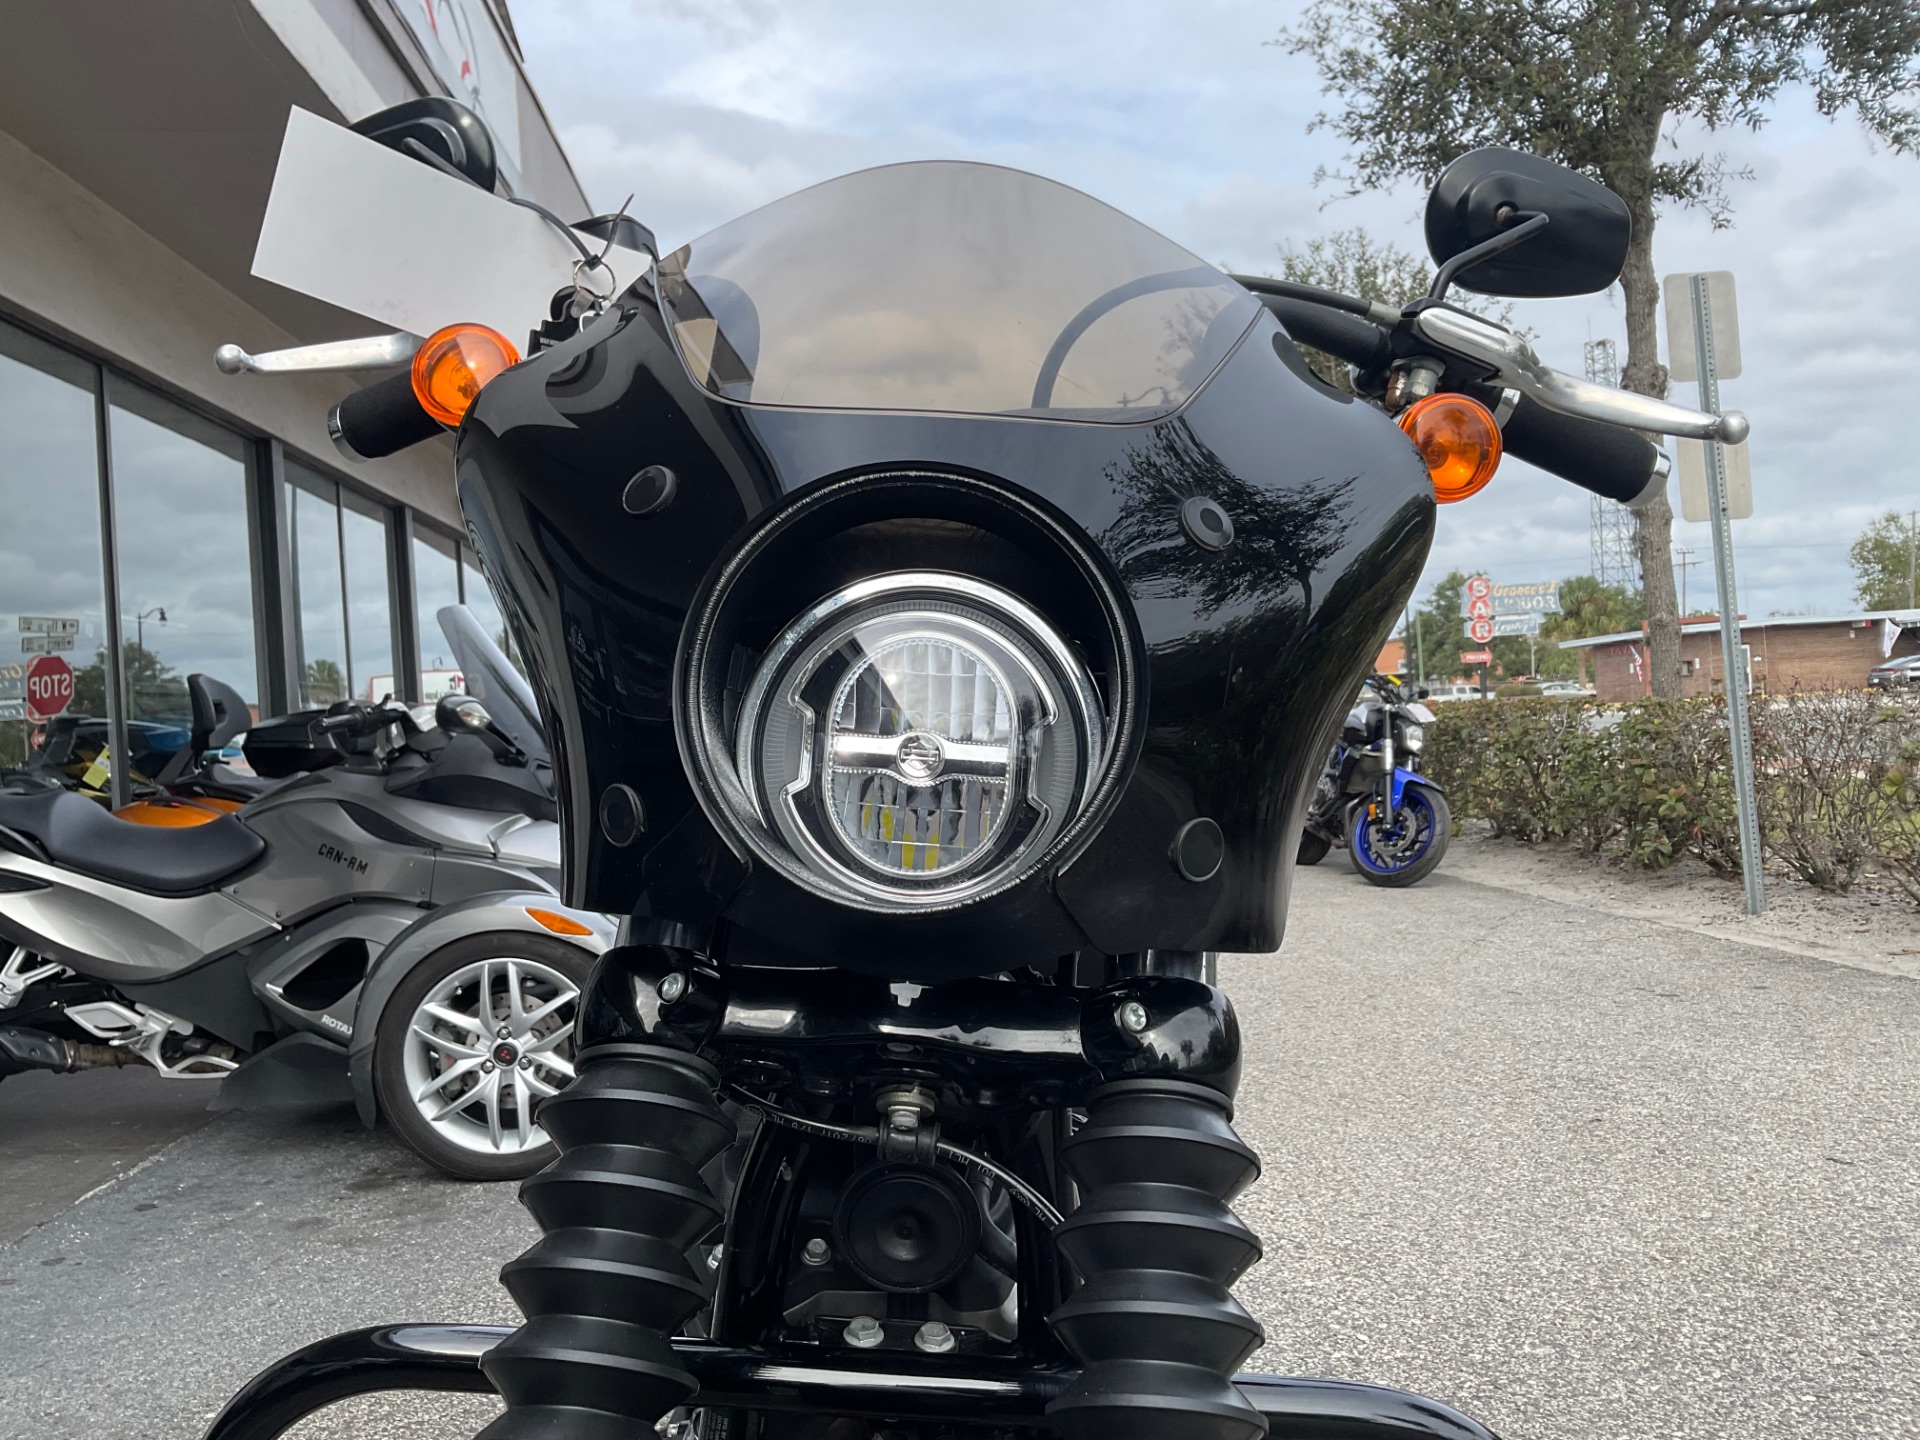 2018 Harley-Davidson Street Bob® 107 in Sanford, Florida - Photo 16